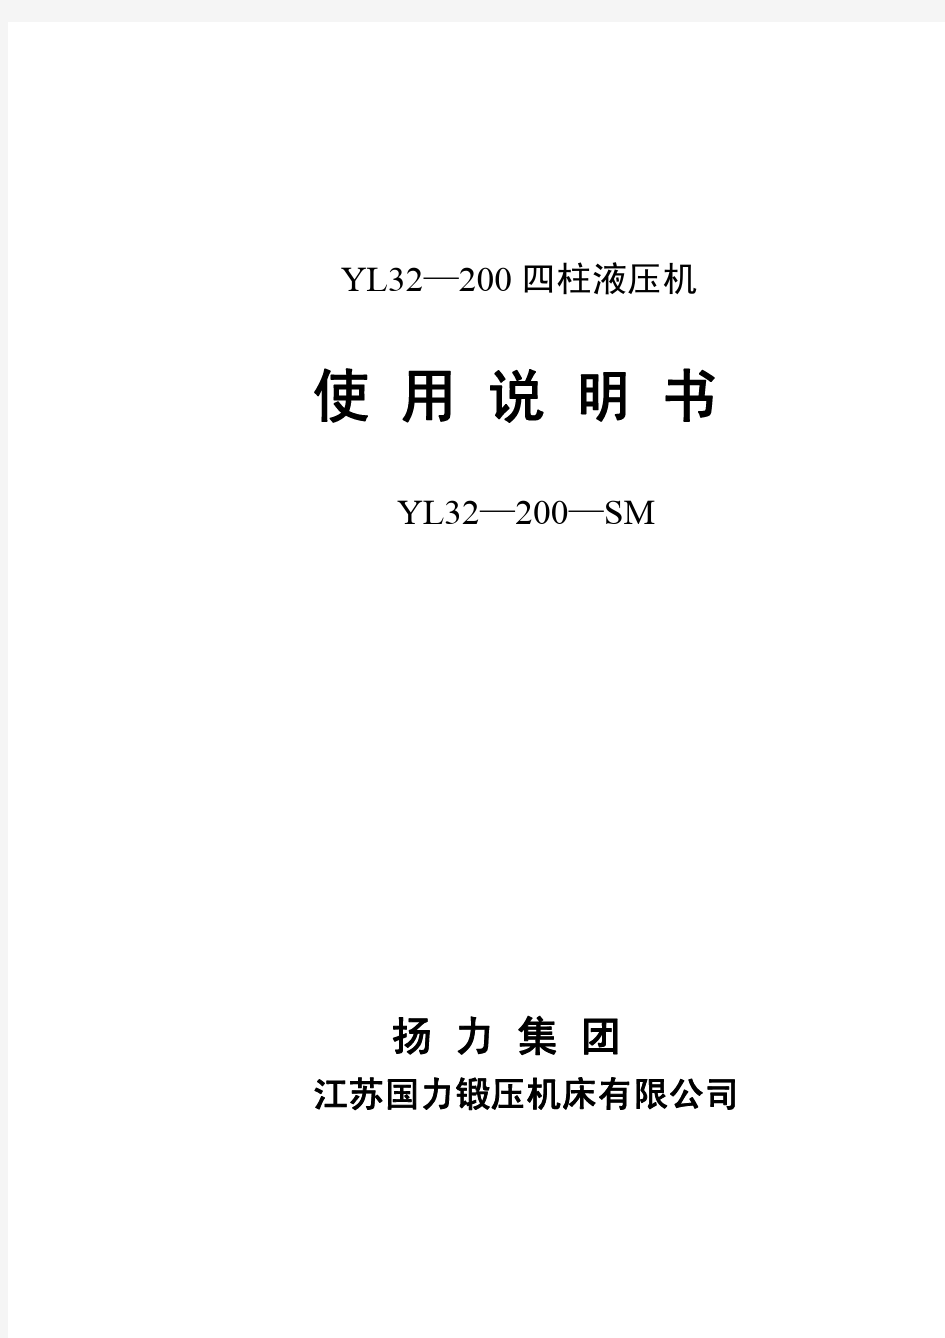 YL32-200液压机使用说明书